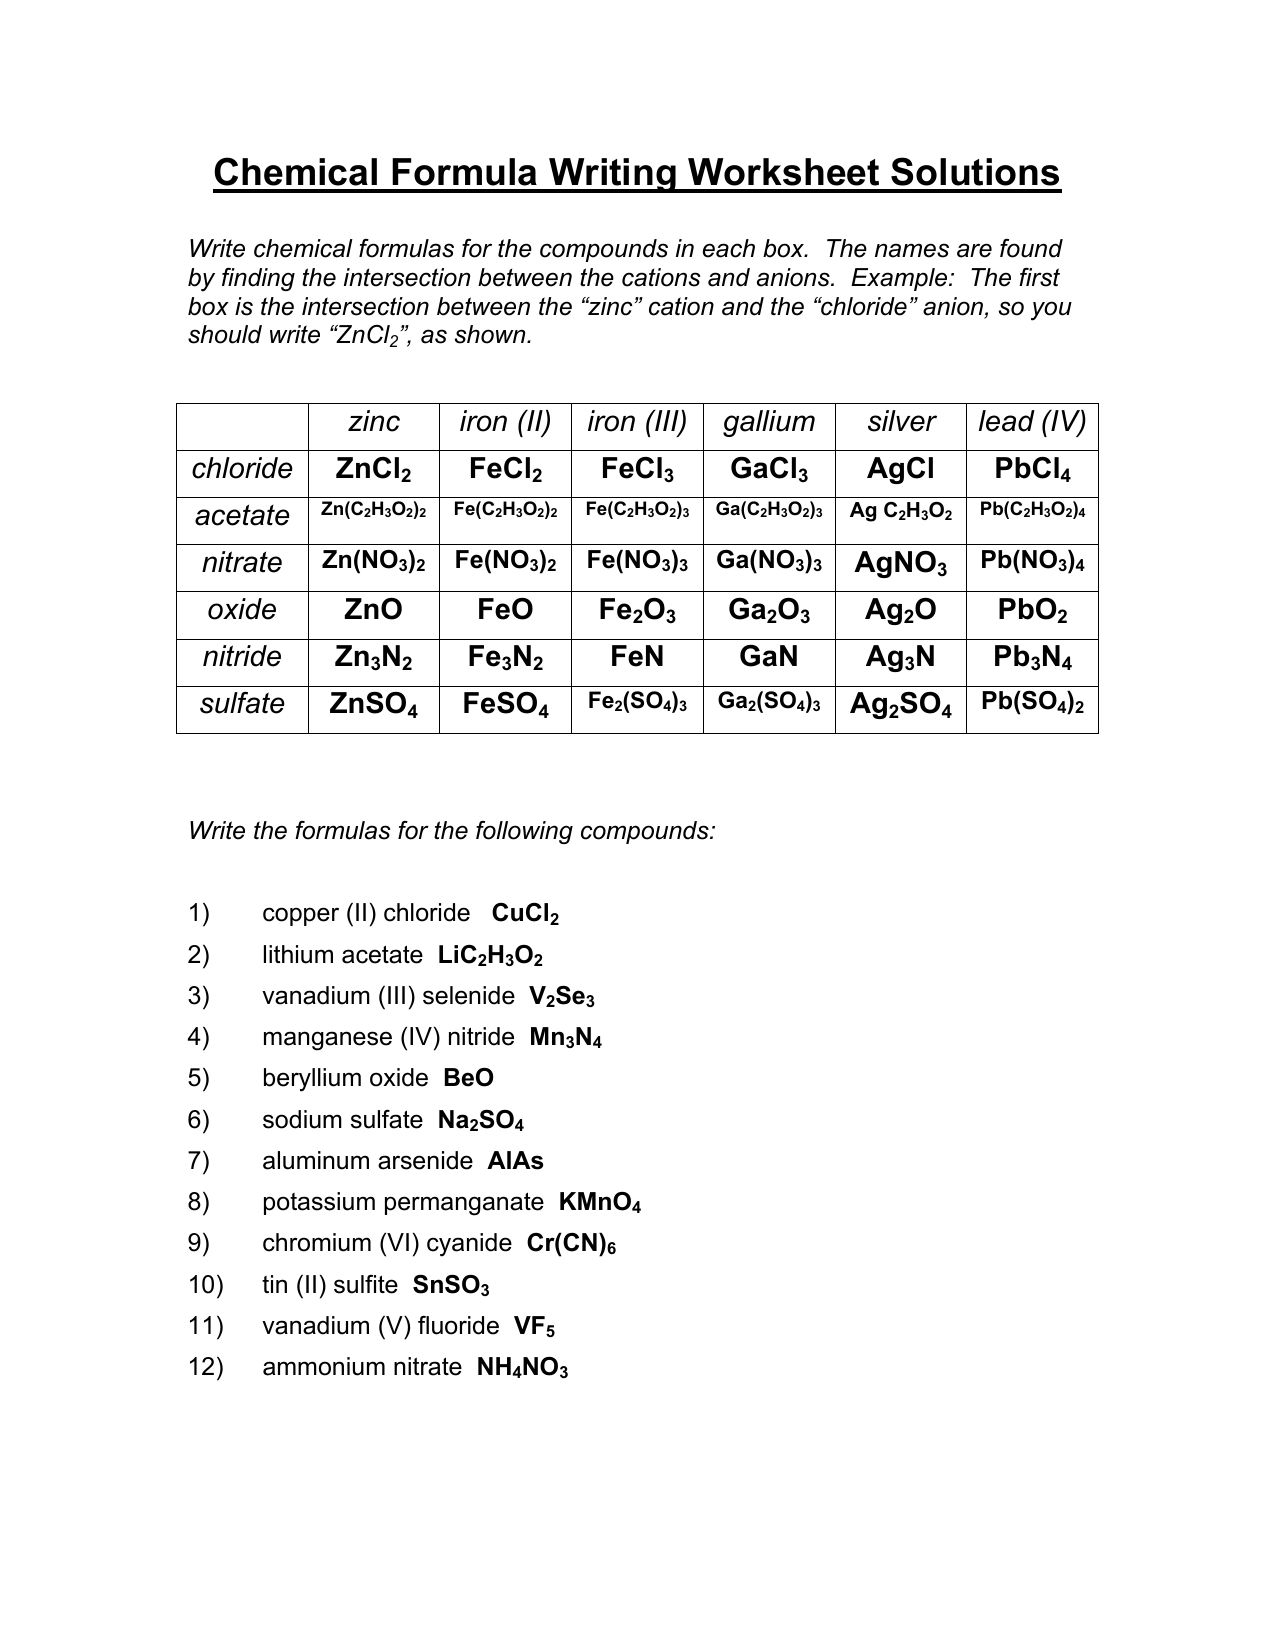 chemical-formula-writing-worksheet-with-answers-chemistryworksheet